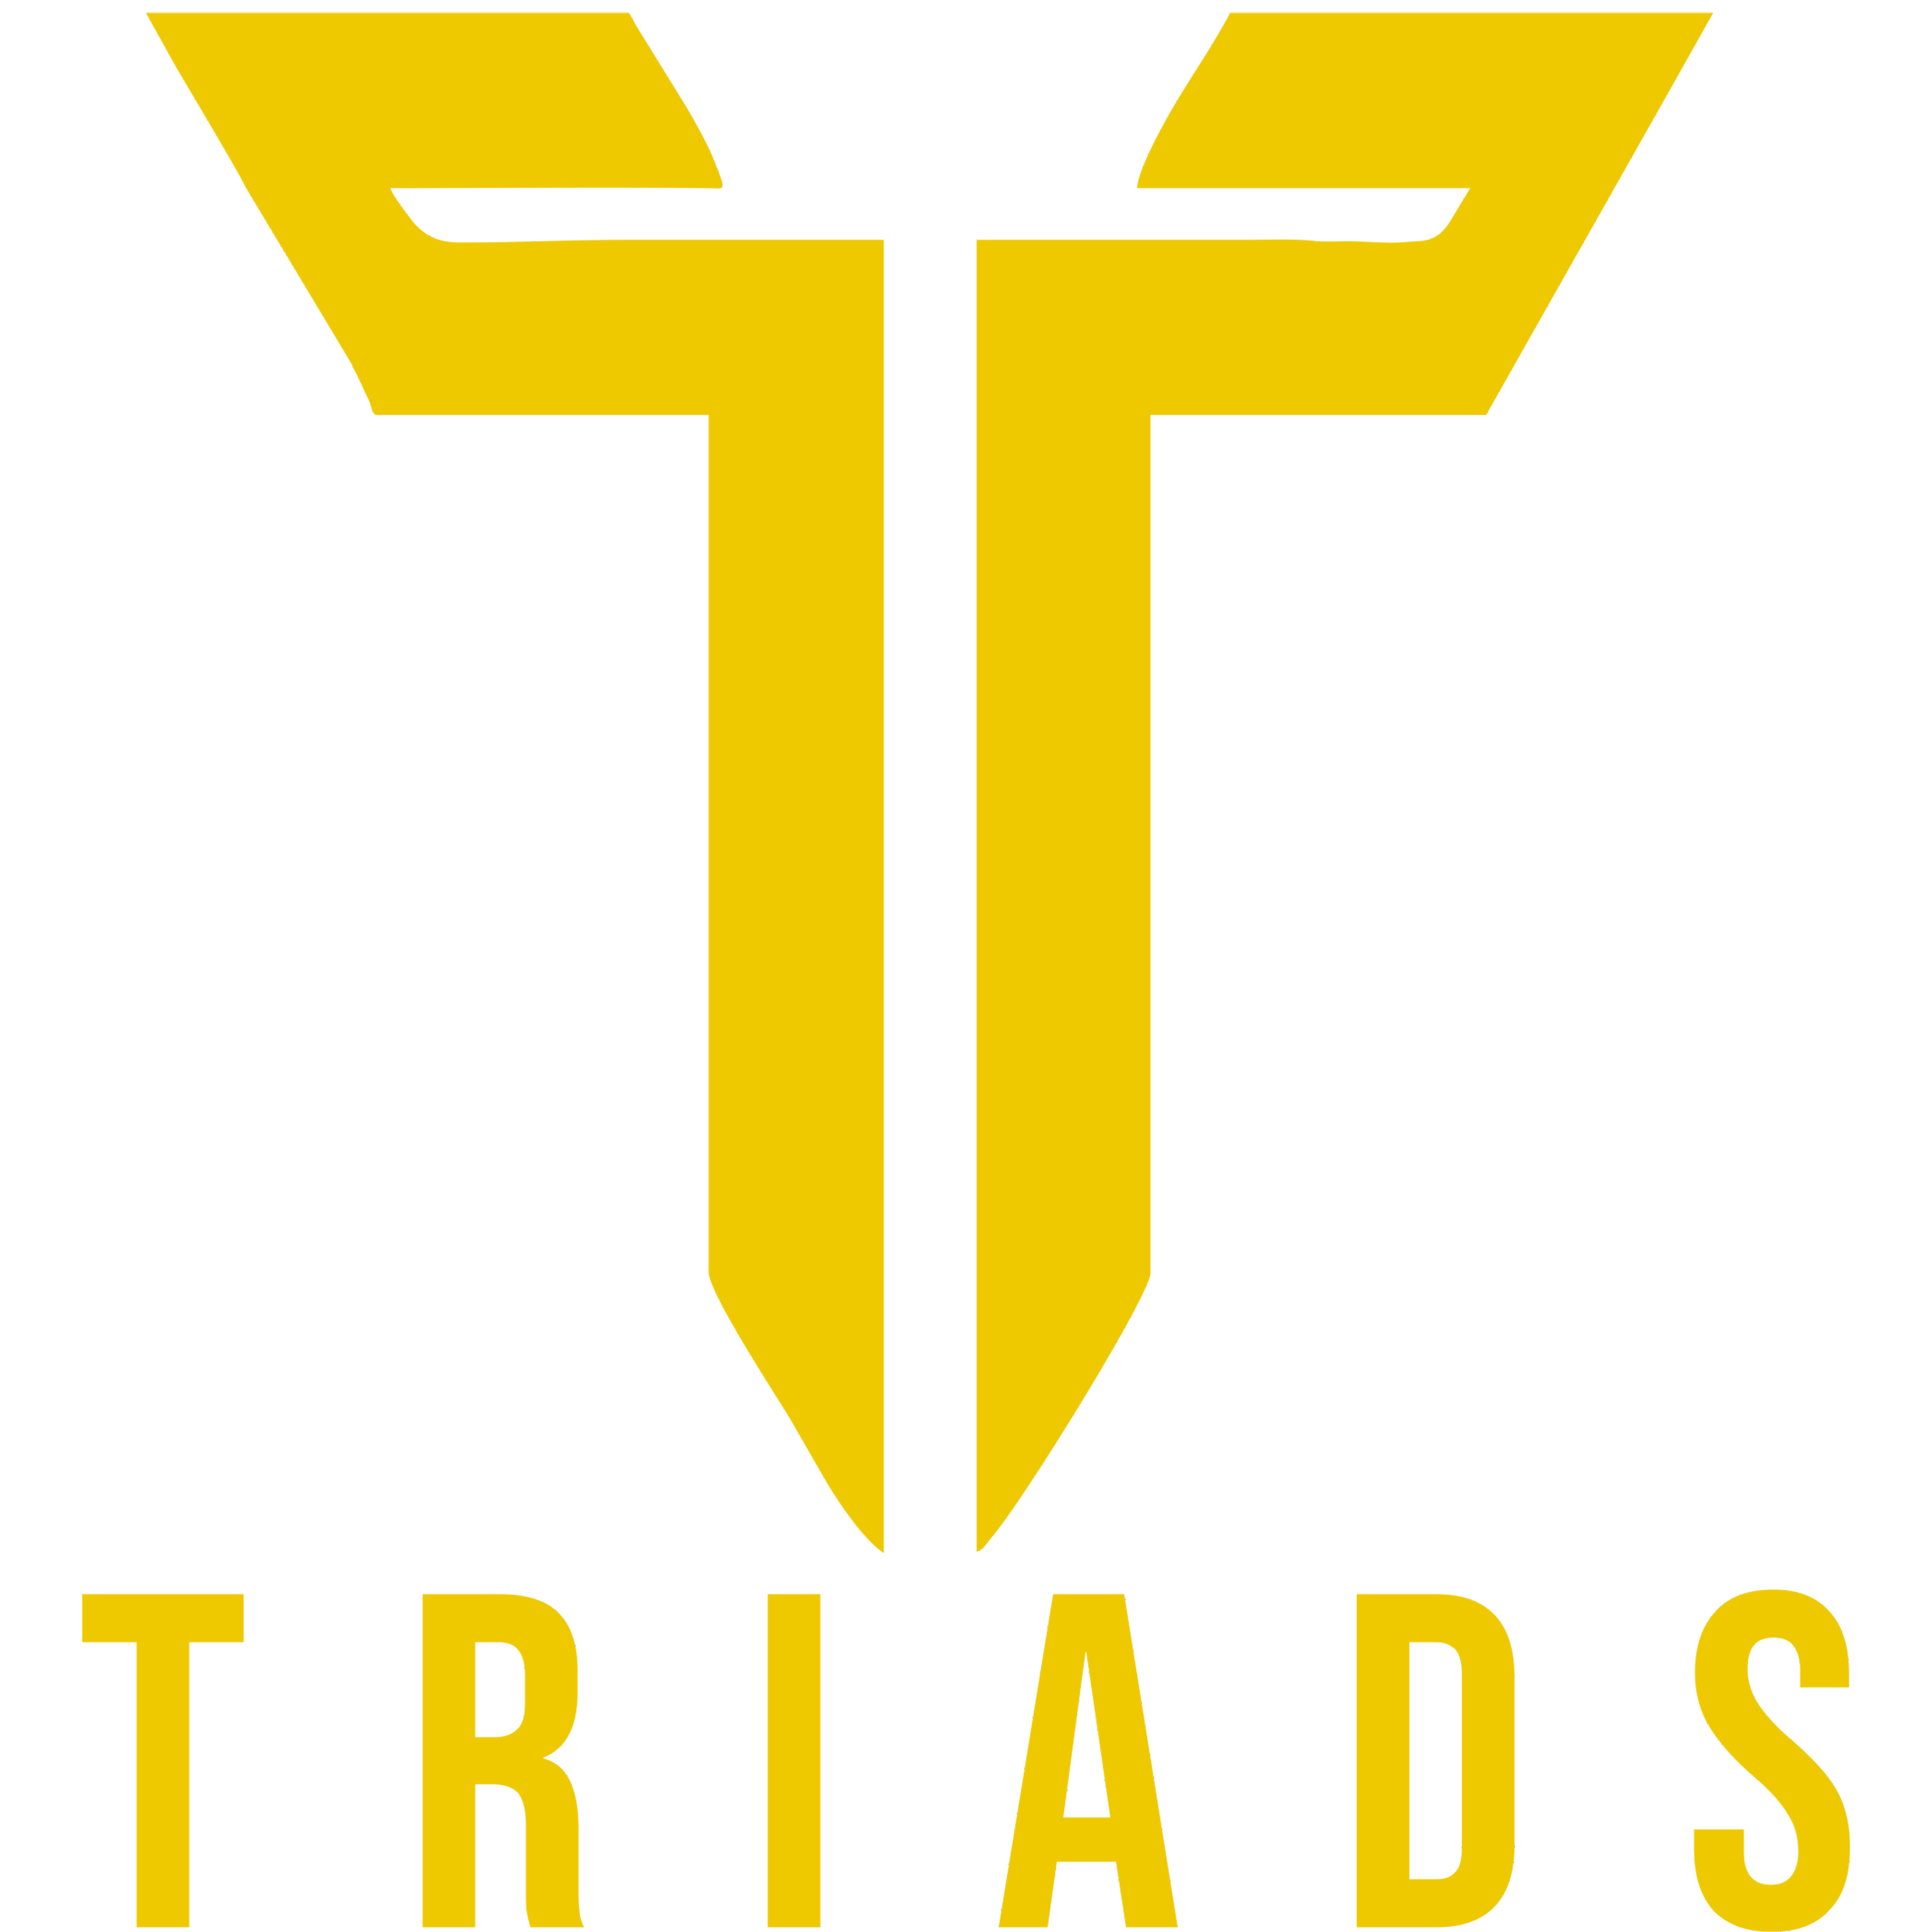 Triads Entertainment